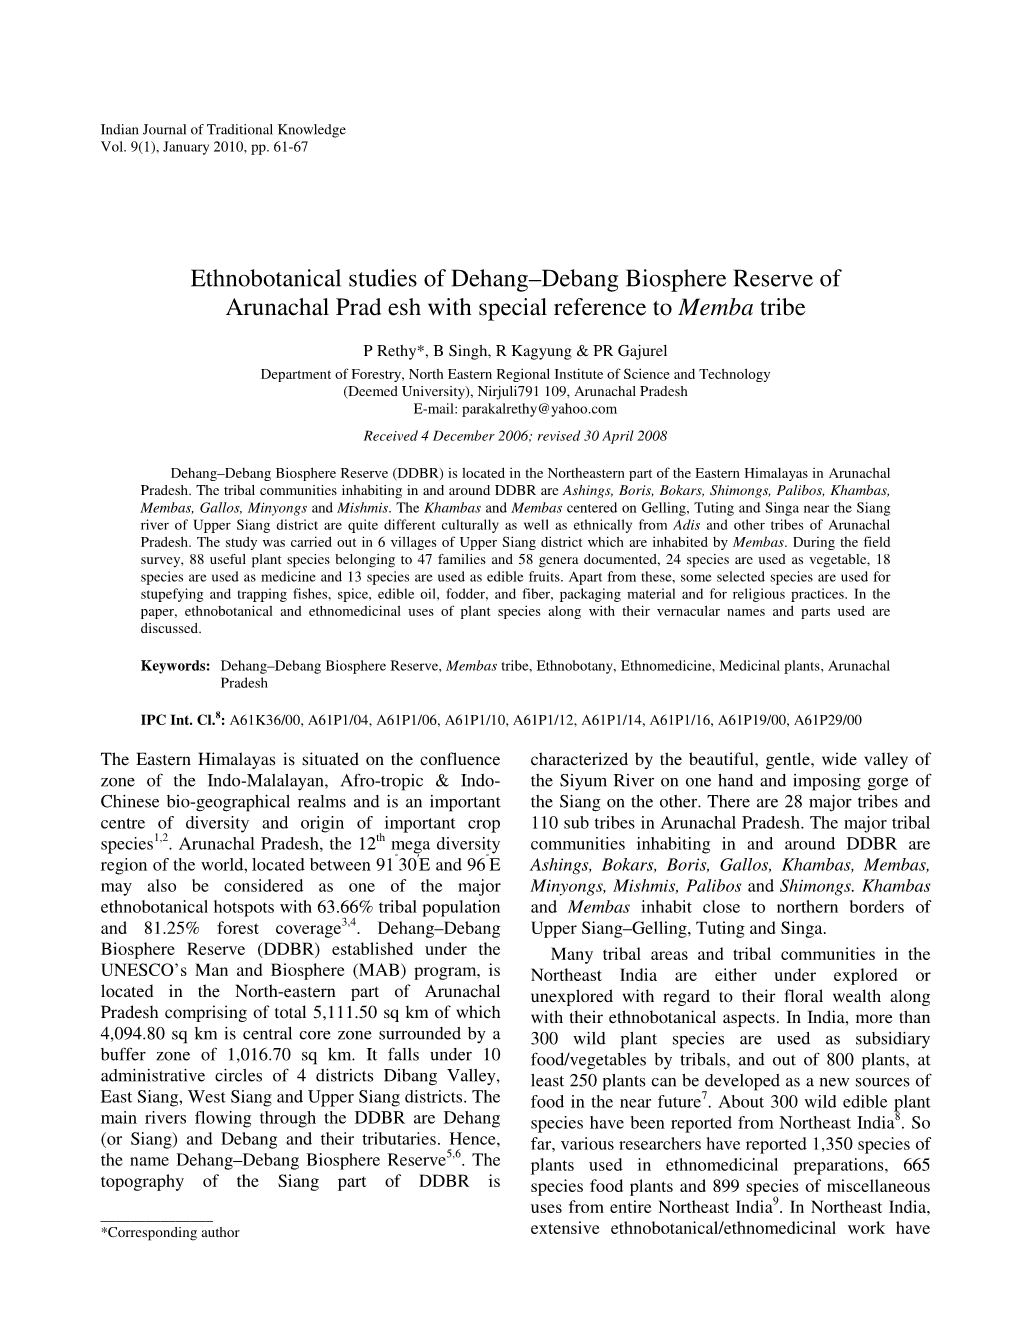 Ethnobotanical Studies of Dehang–Debang Biosphere Reserve of Arunachal Prad Esh with Special Reference to Memba Tribe